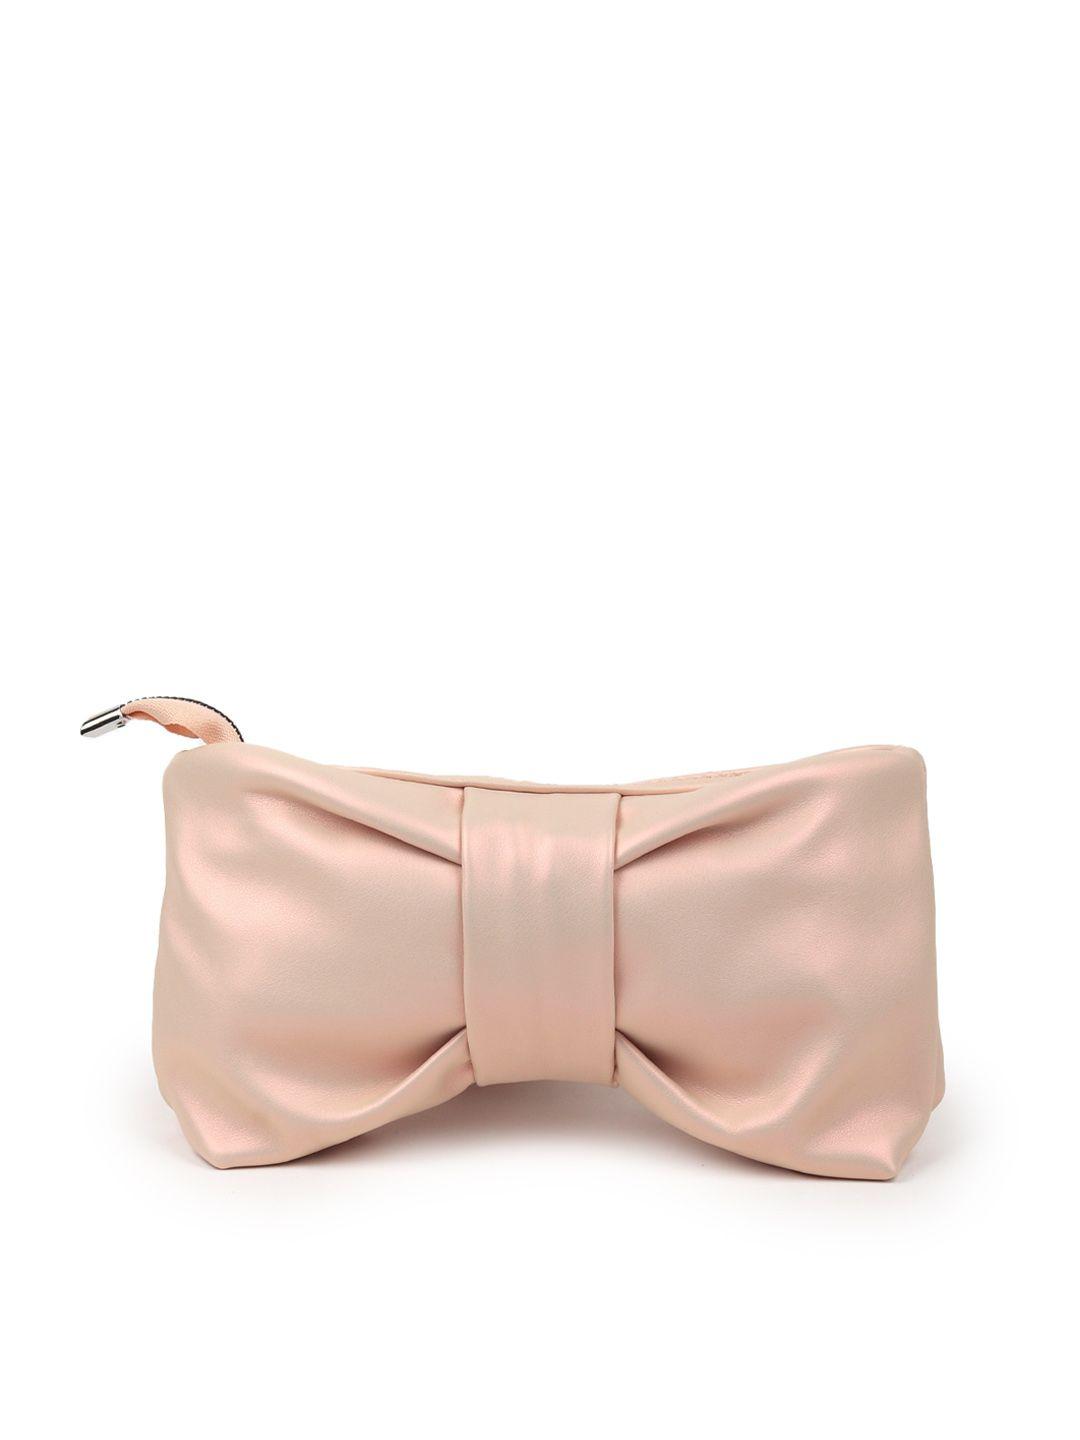 odette handheld bag with bow detail